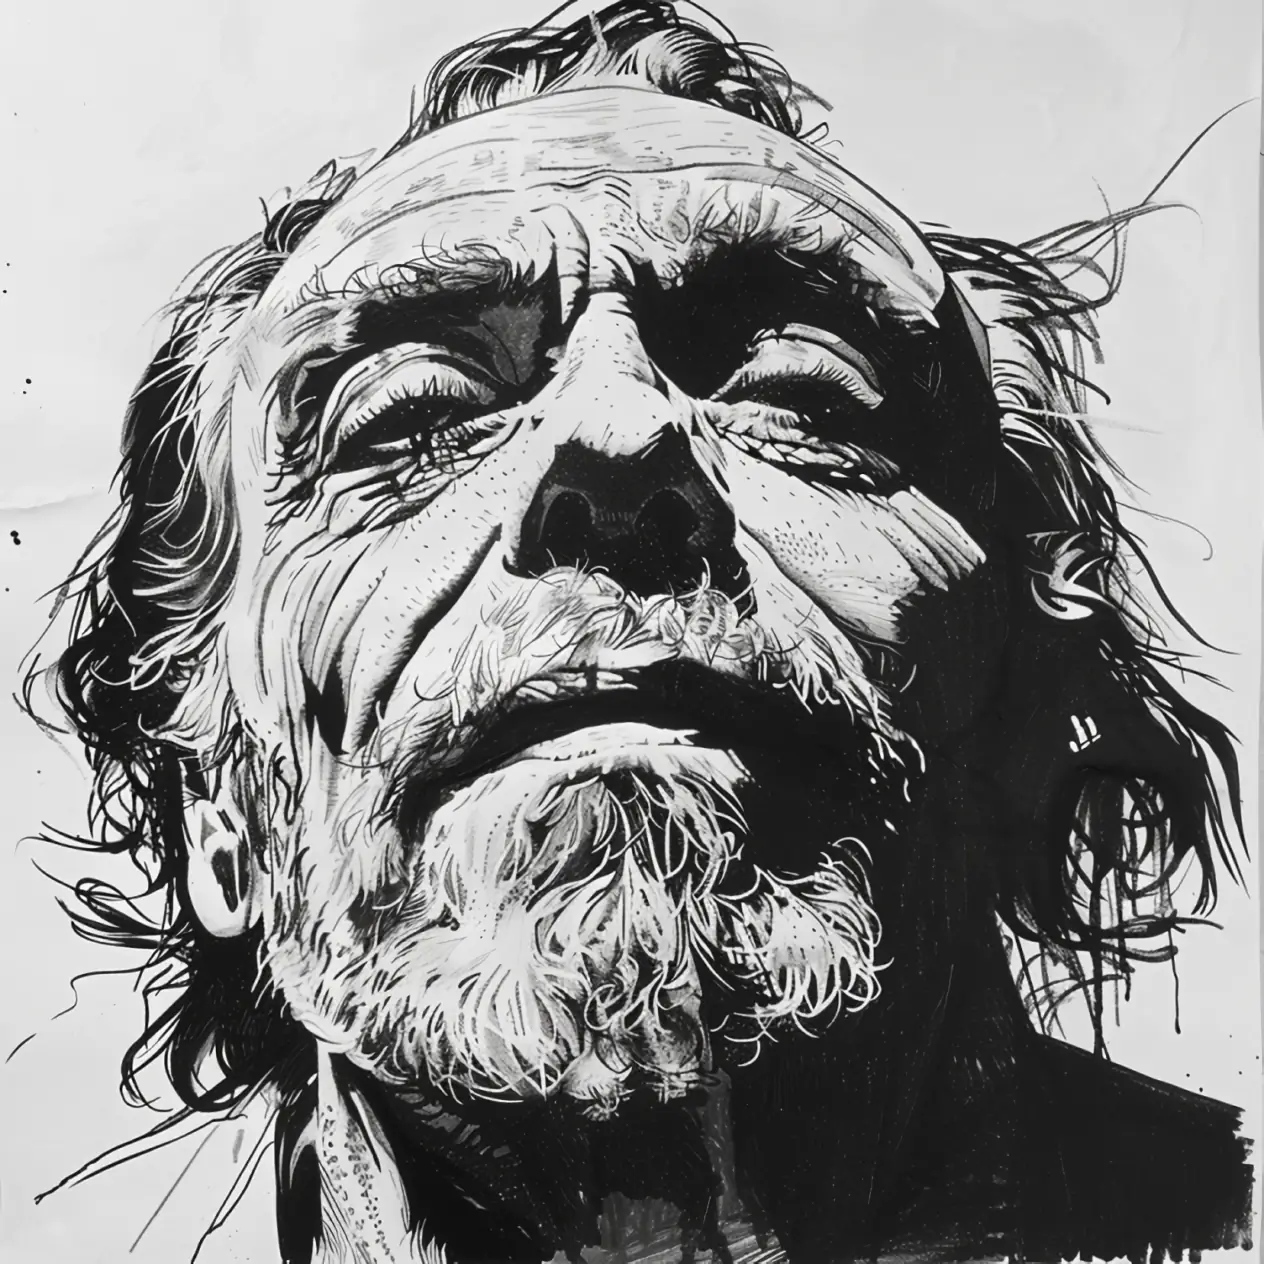 Artistic rendering of Charles Bukowski